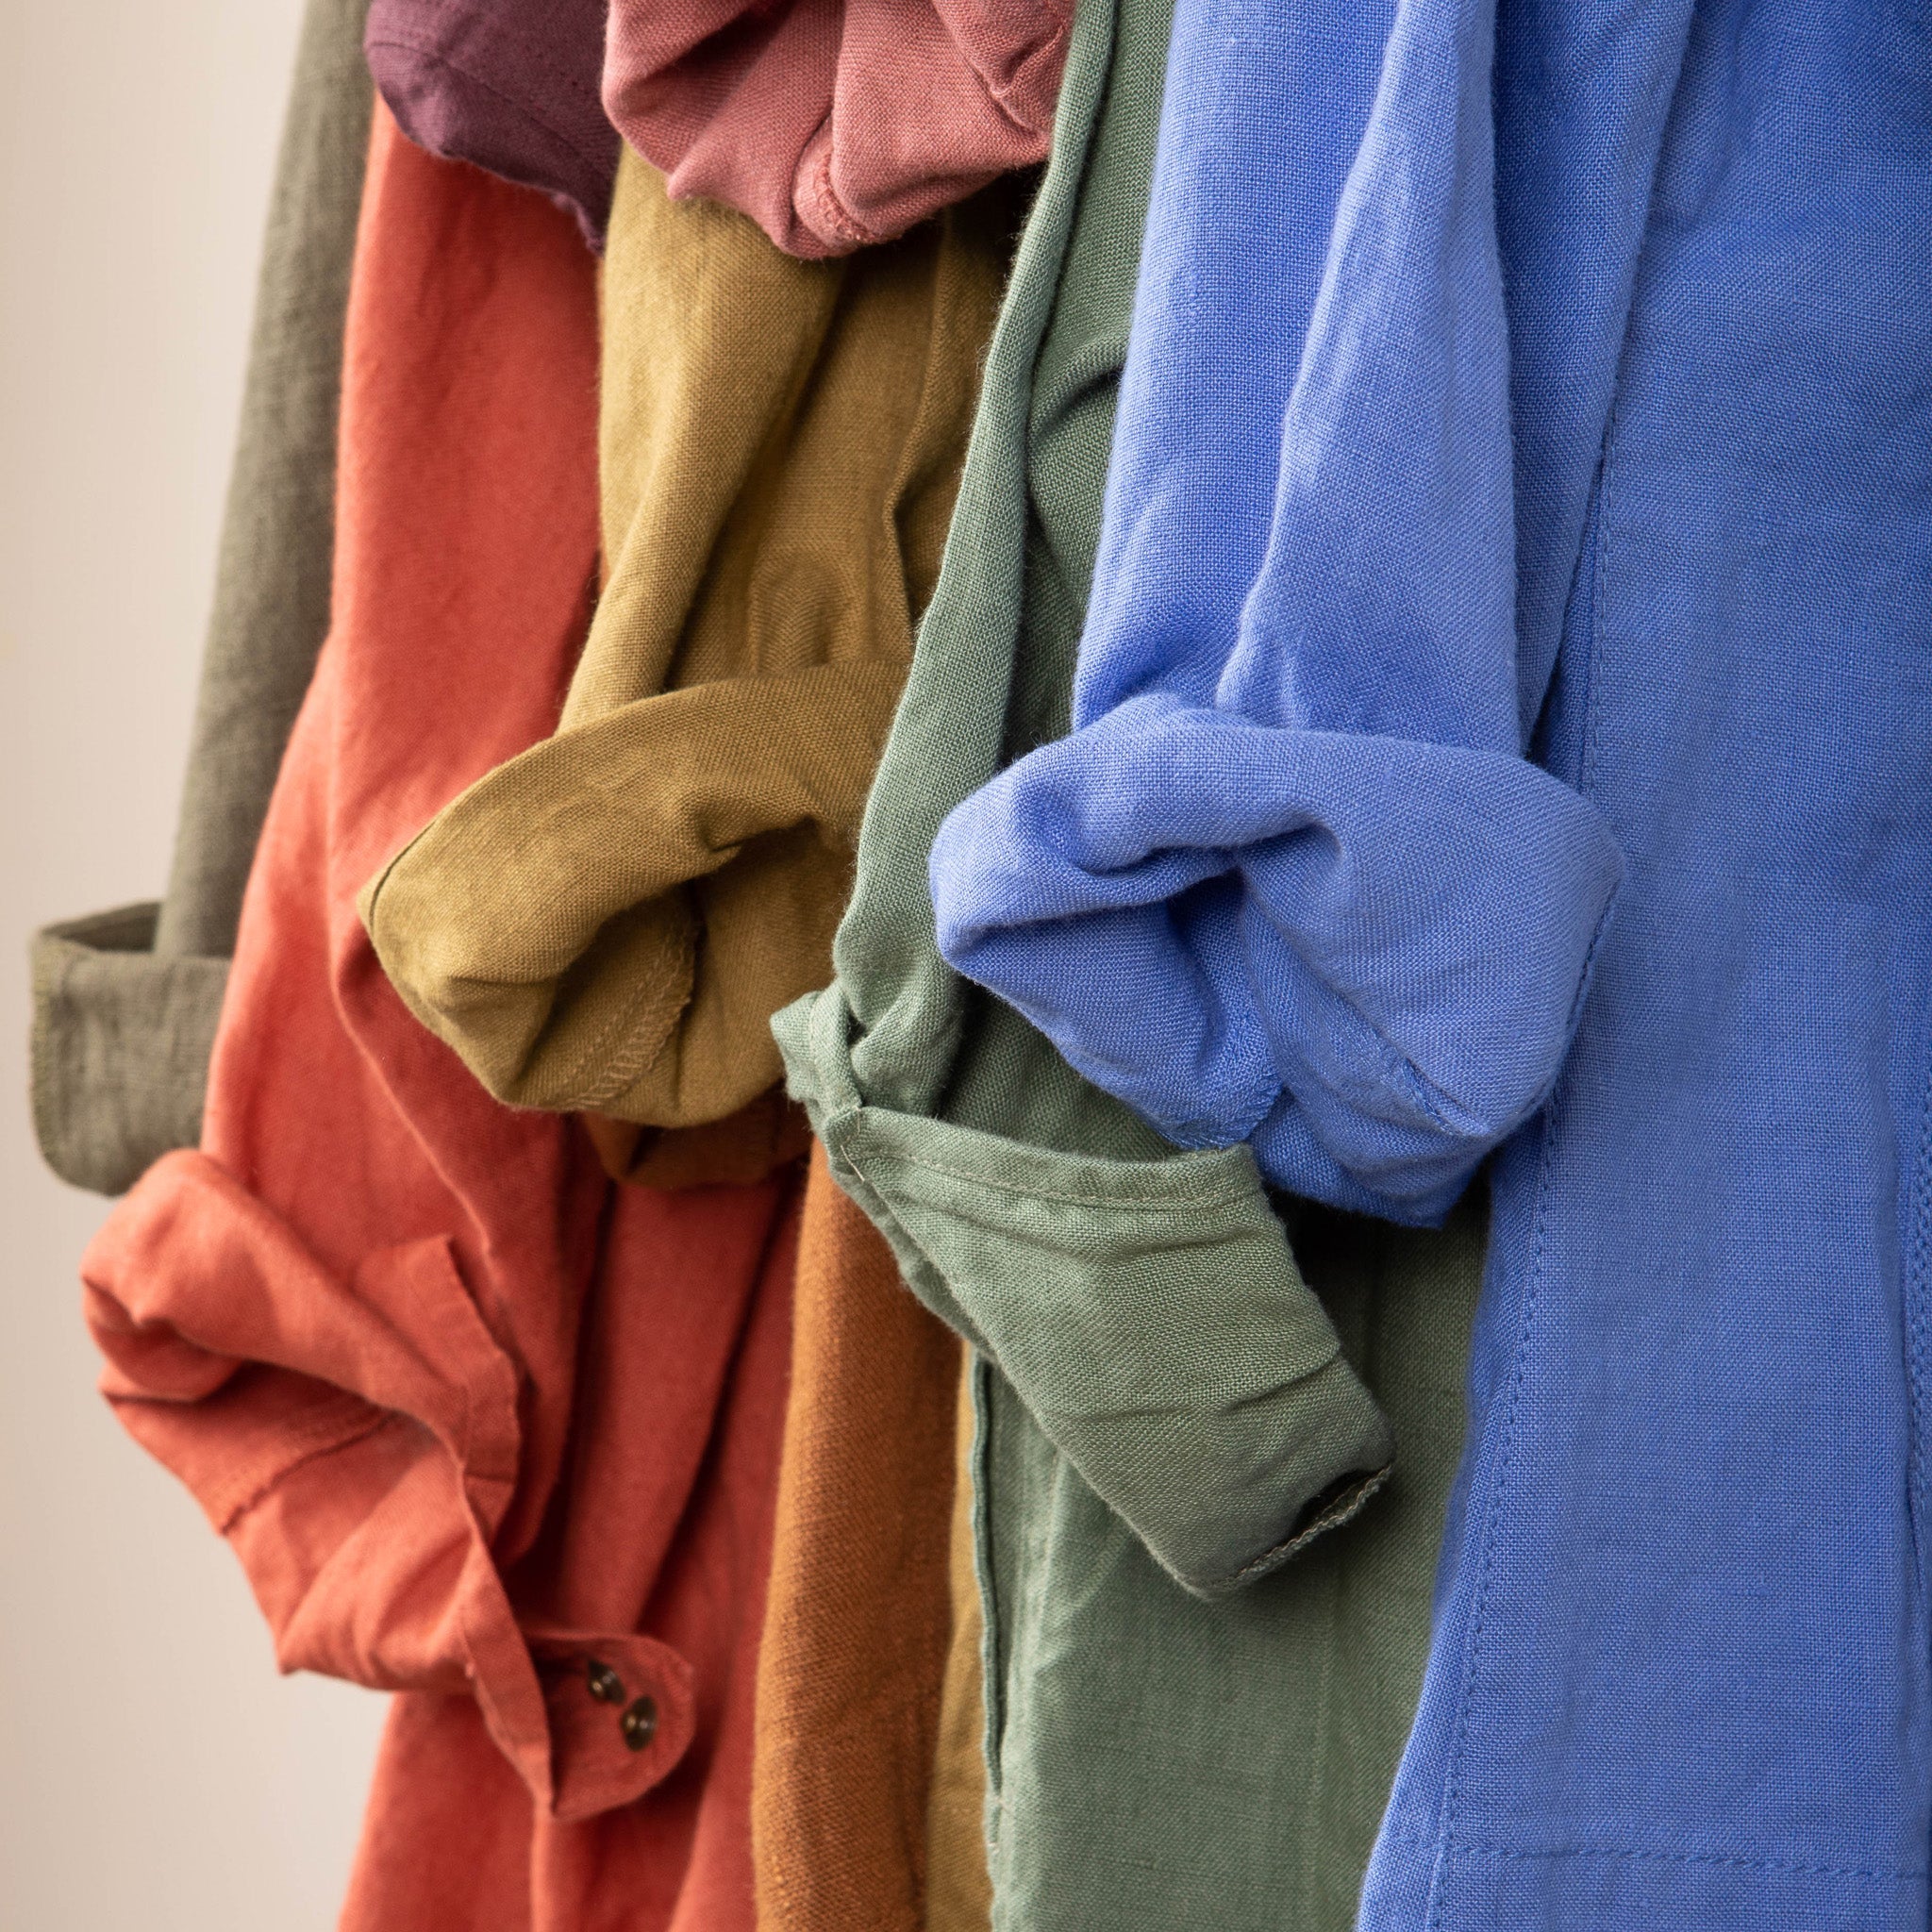 How to Organize Linen Closet | Organizing and Styling Linen Clothes - notPERFECTLINEN EU